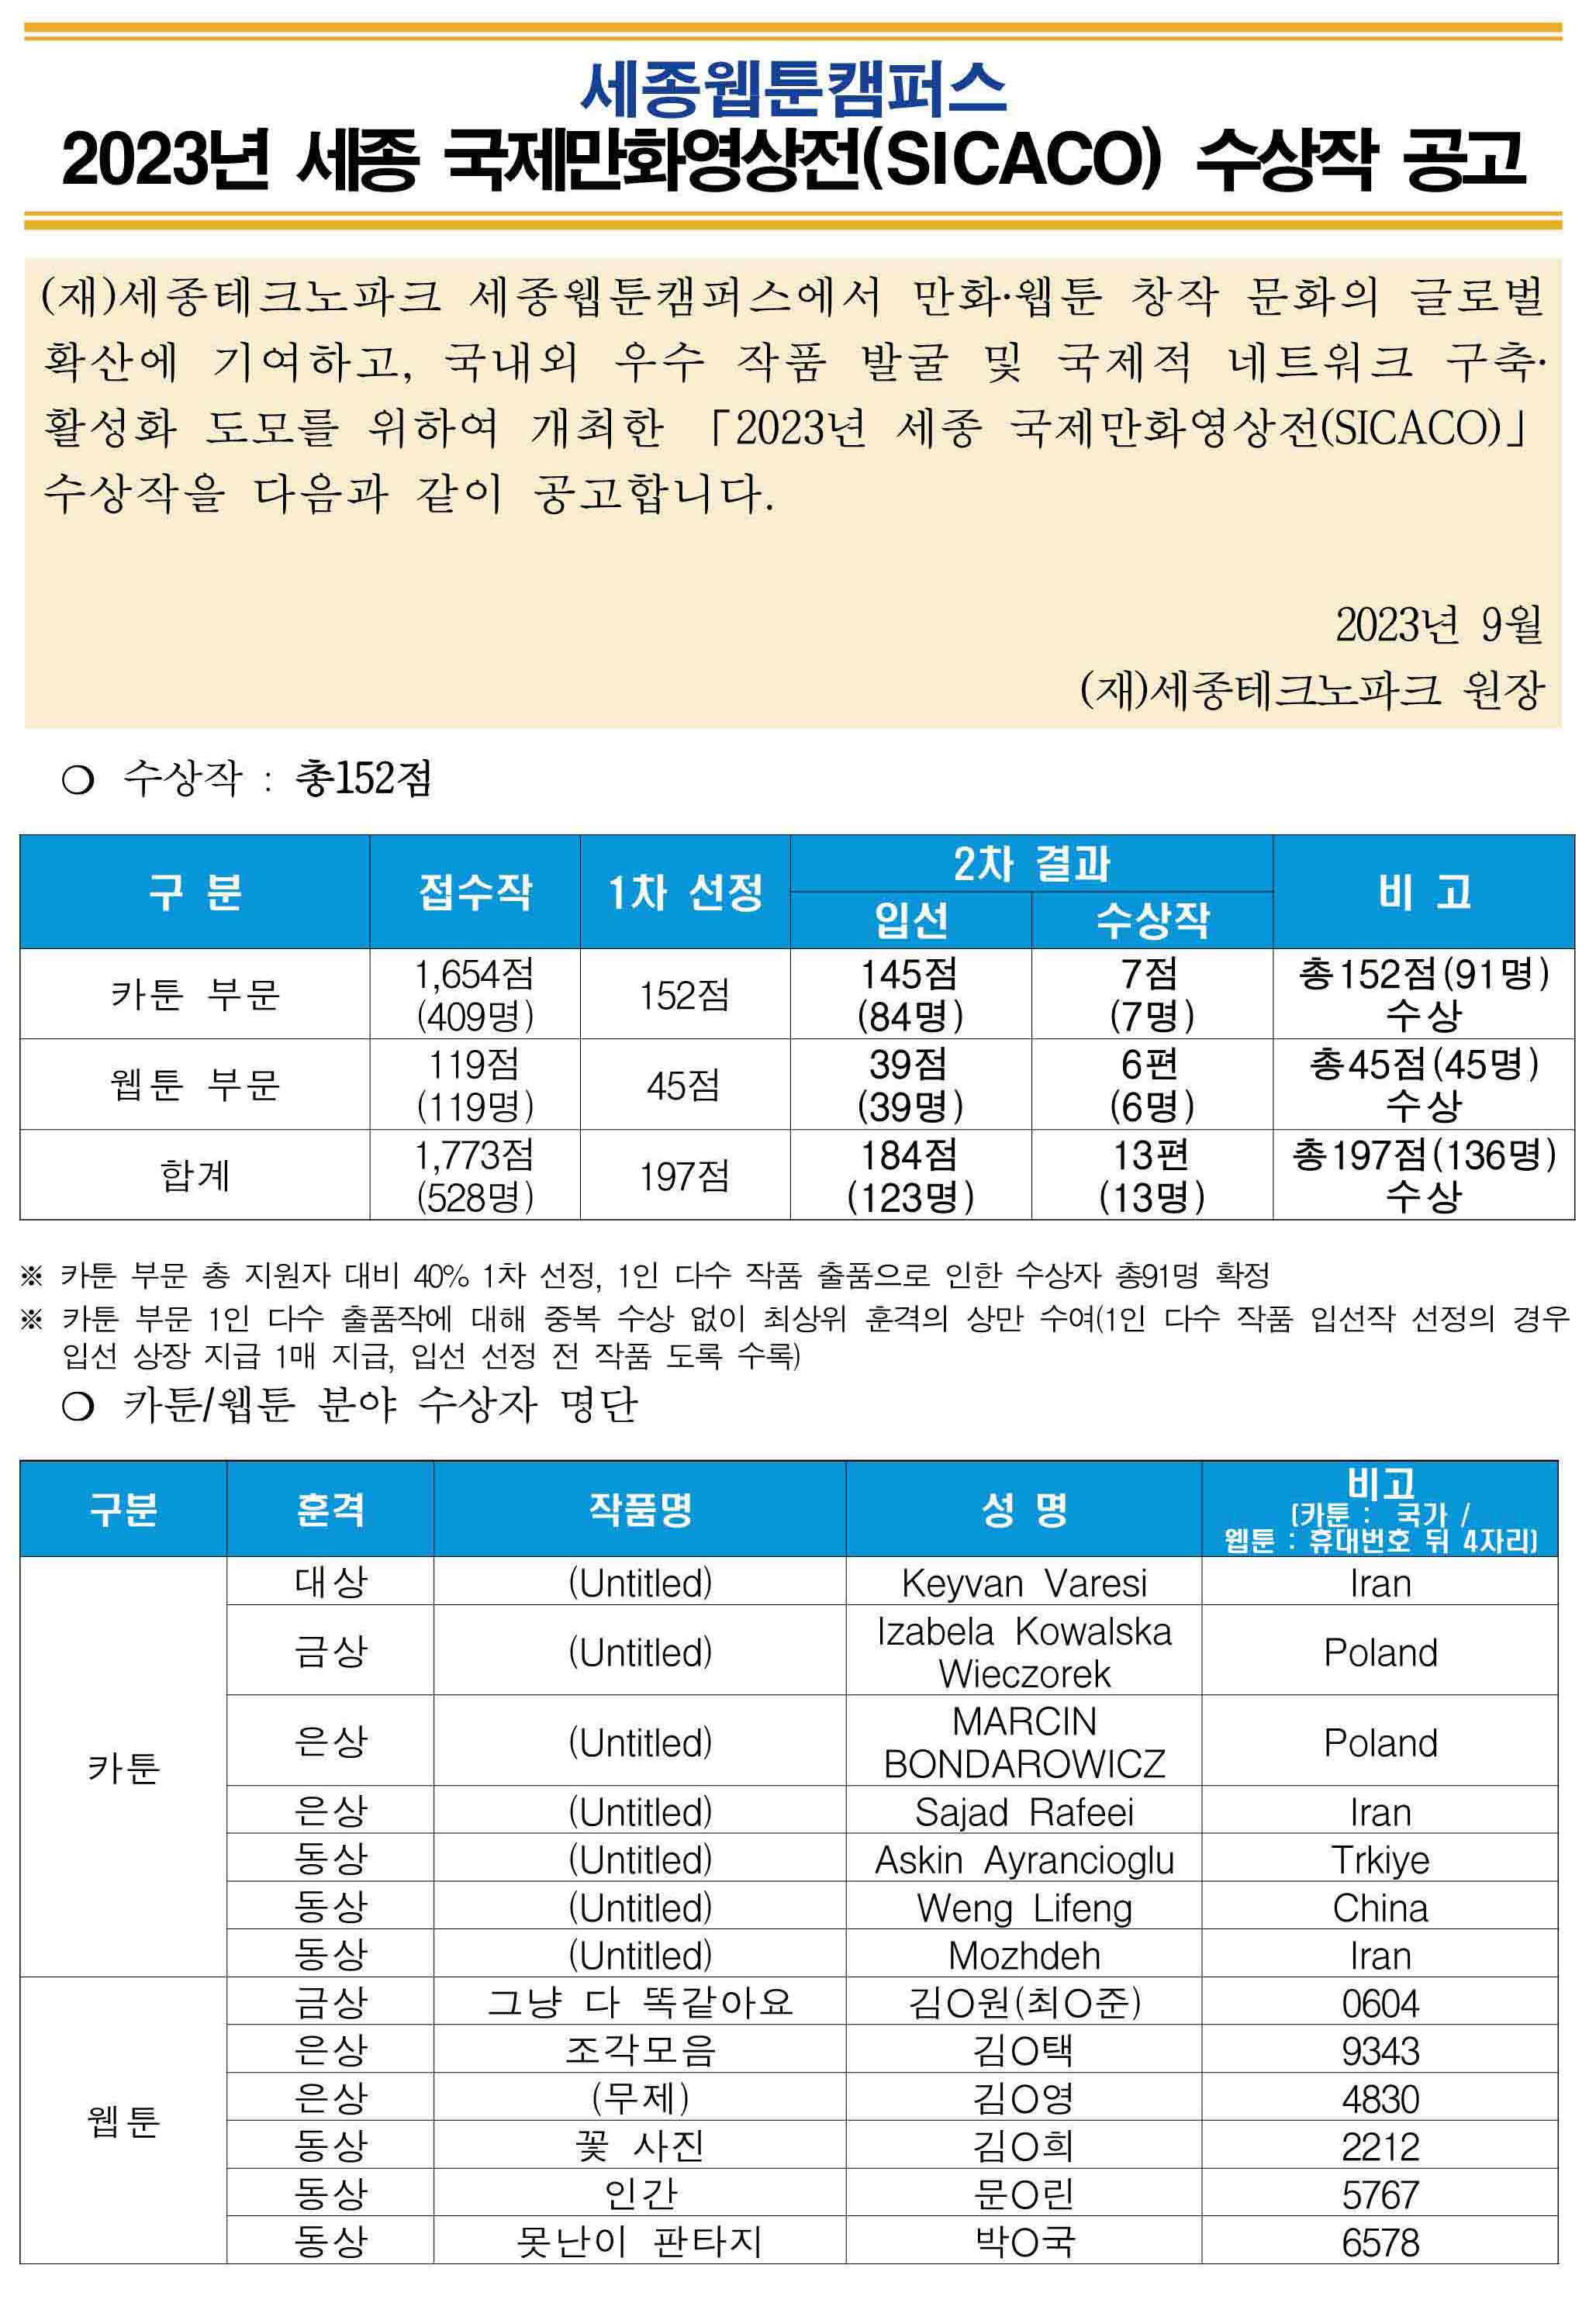 Results of Sejong International Cartoon Contest, Sicaco 2023